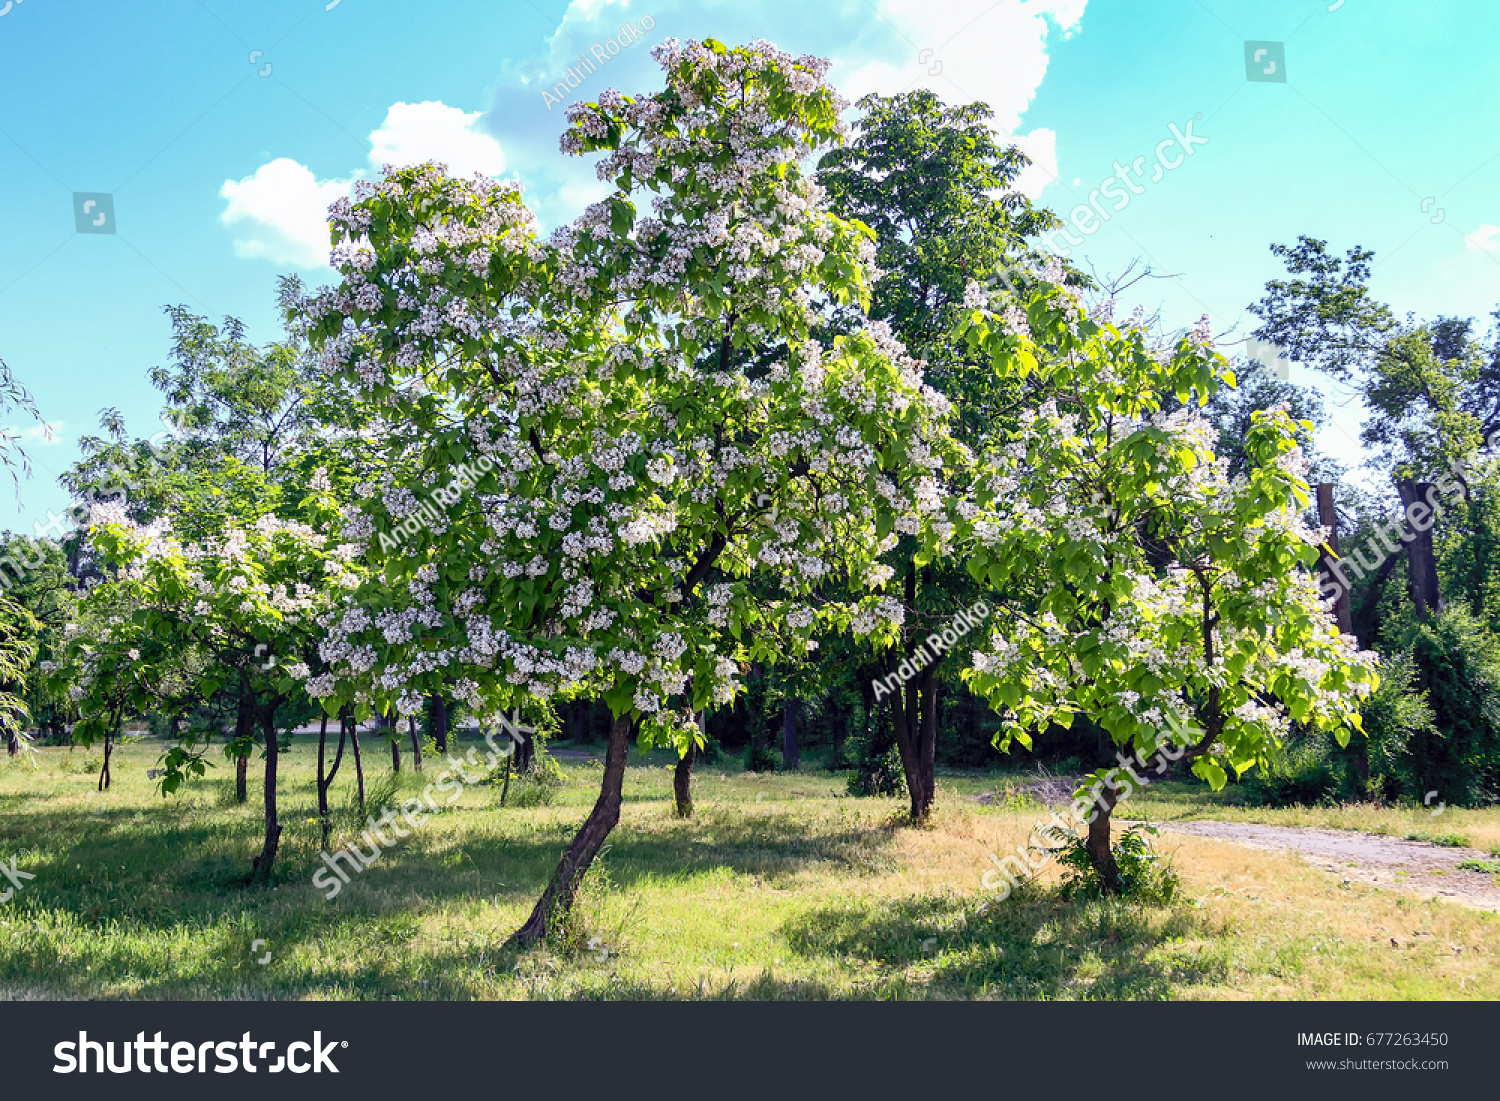 Flowering tree Catalpa bignonioides. White flowers and green leaves #677263450